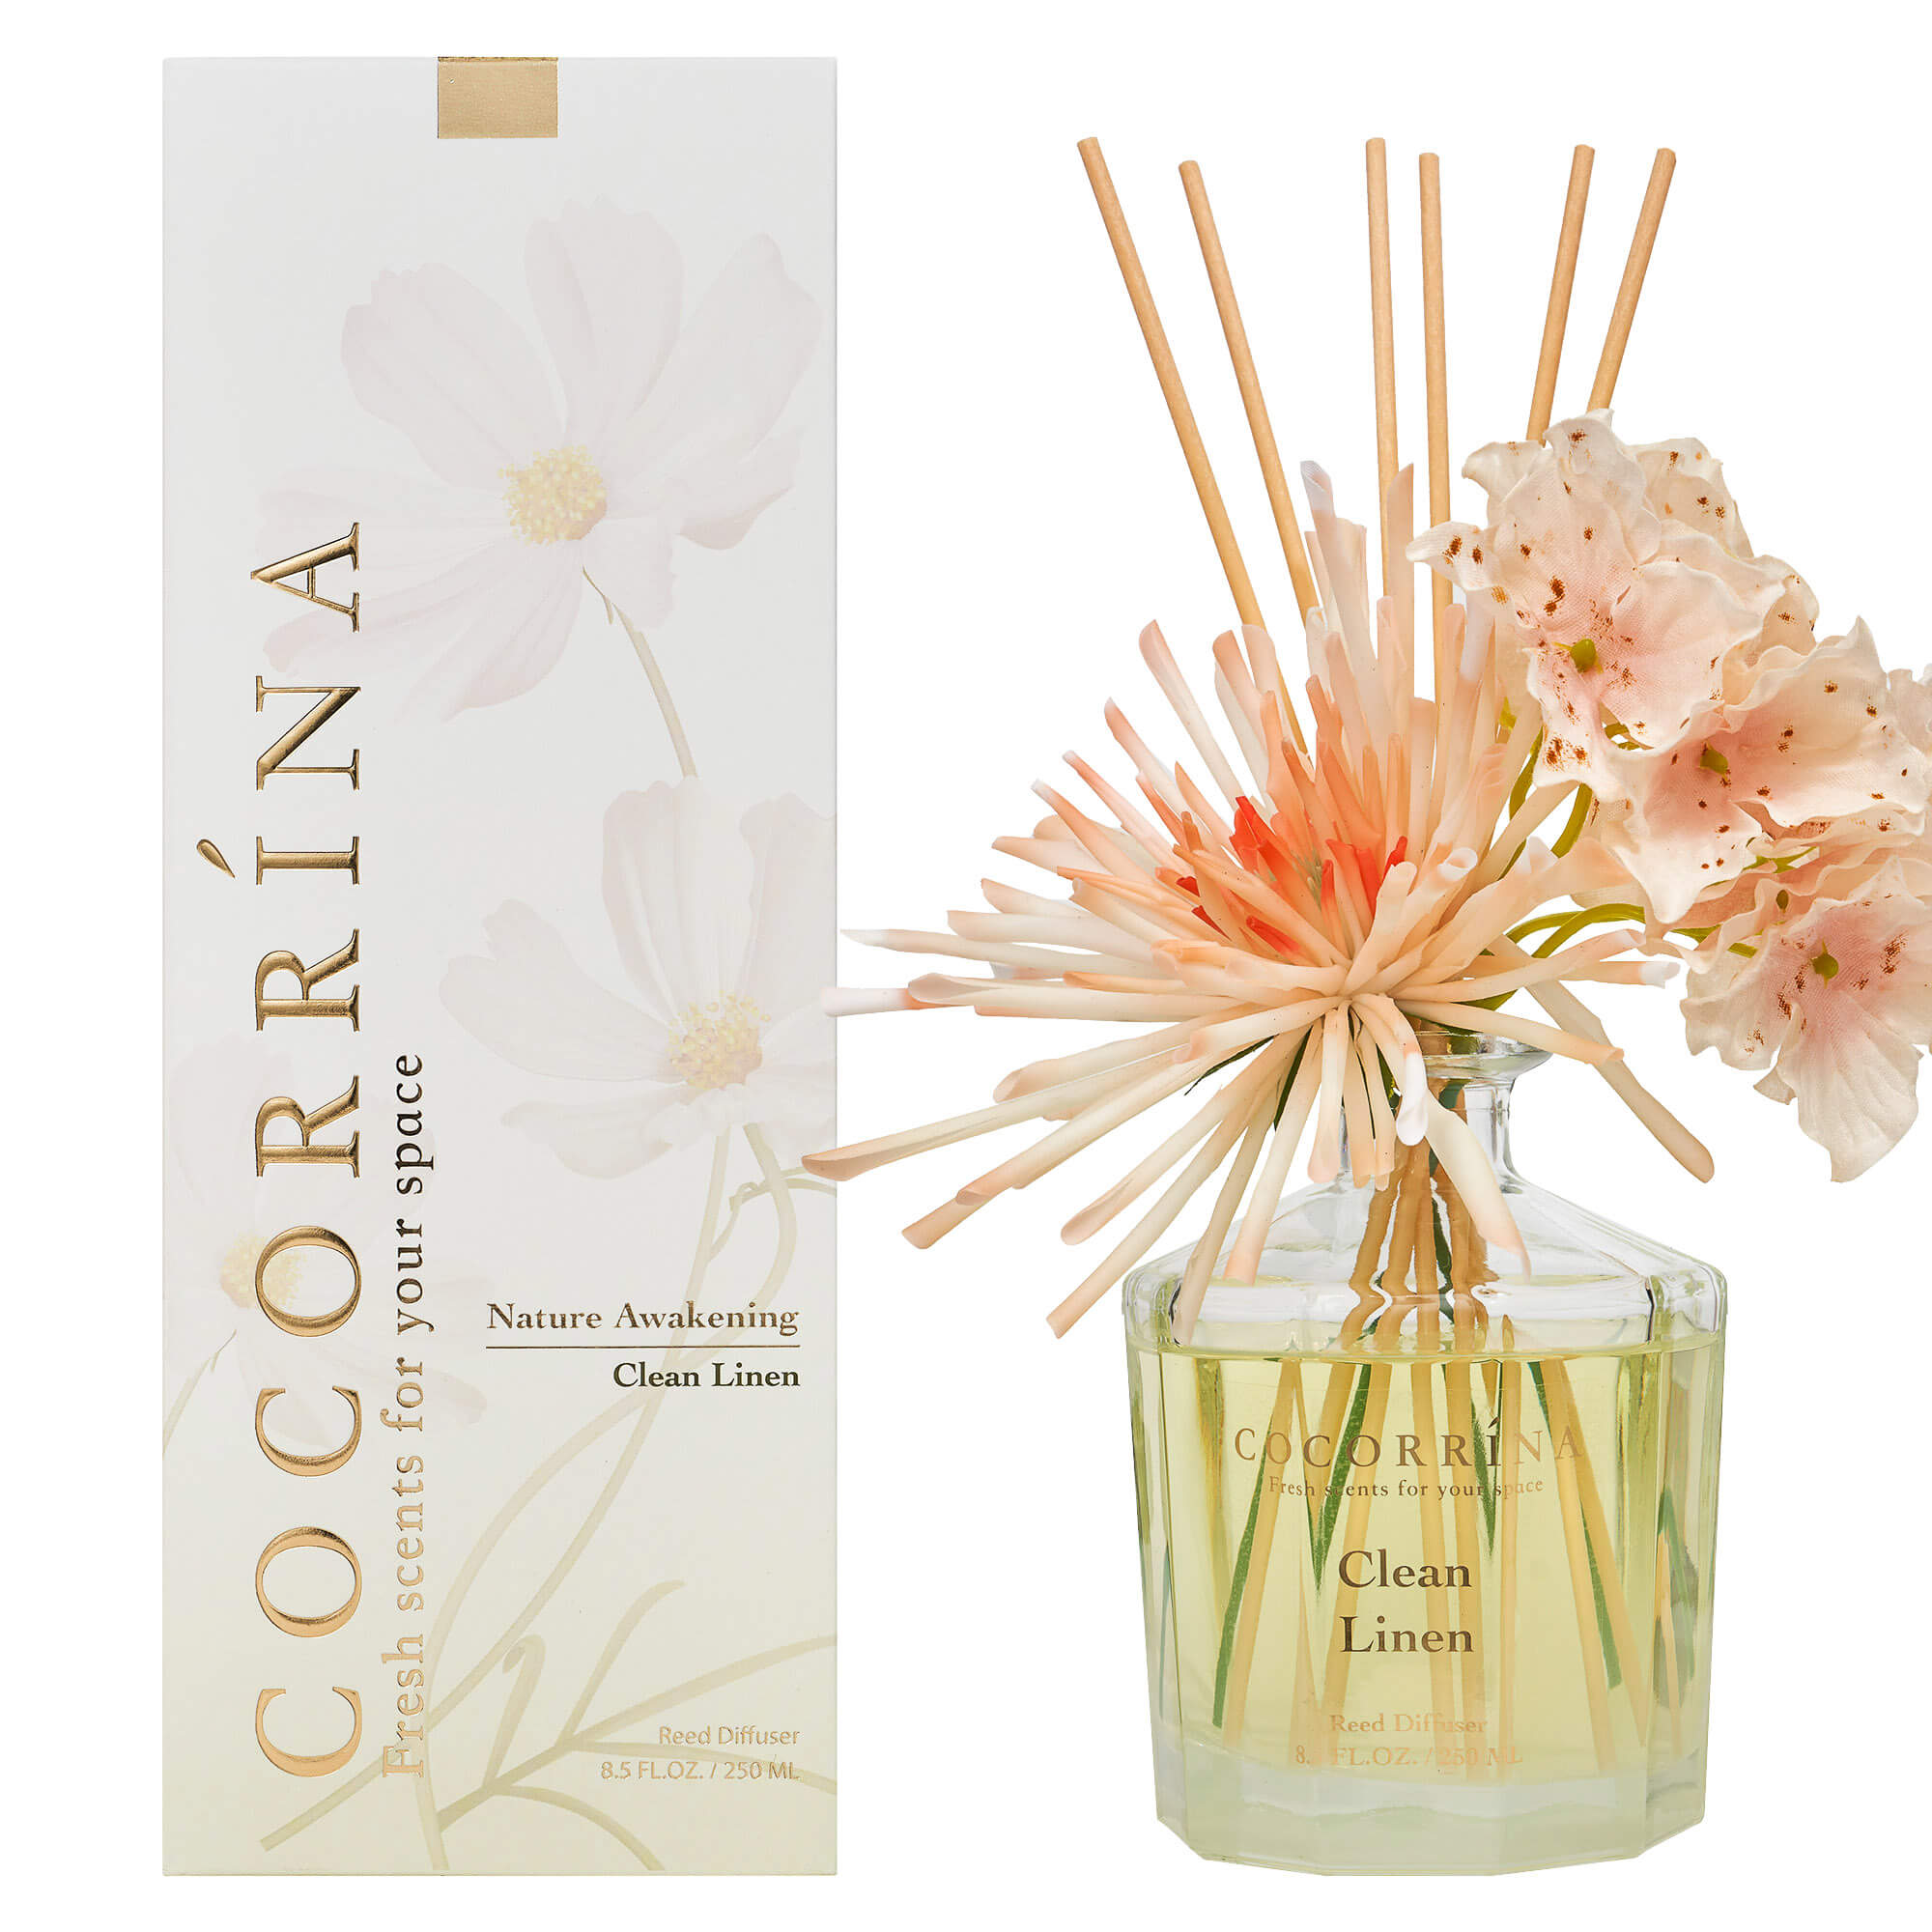 COCORRÍNA Clean Linen Master Flower Reed Diffusor-Set